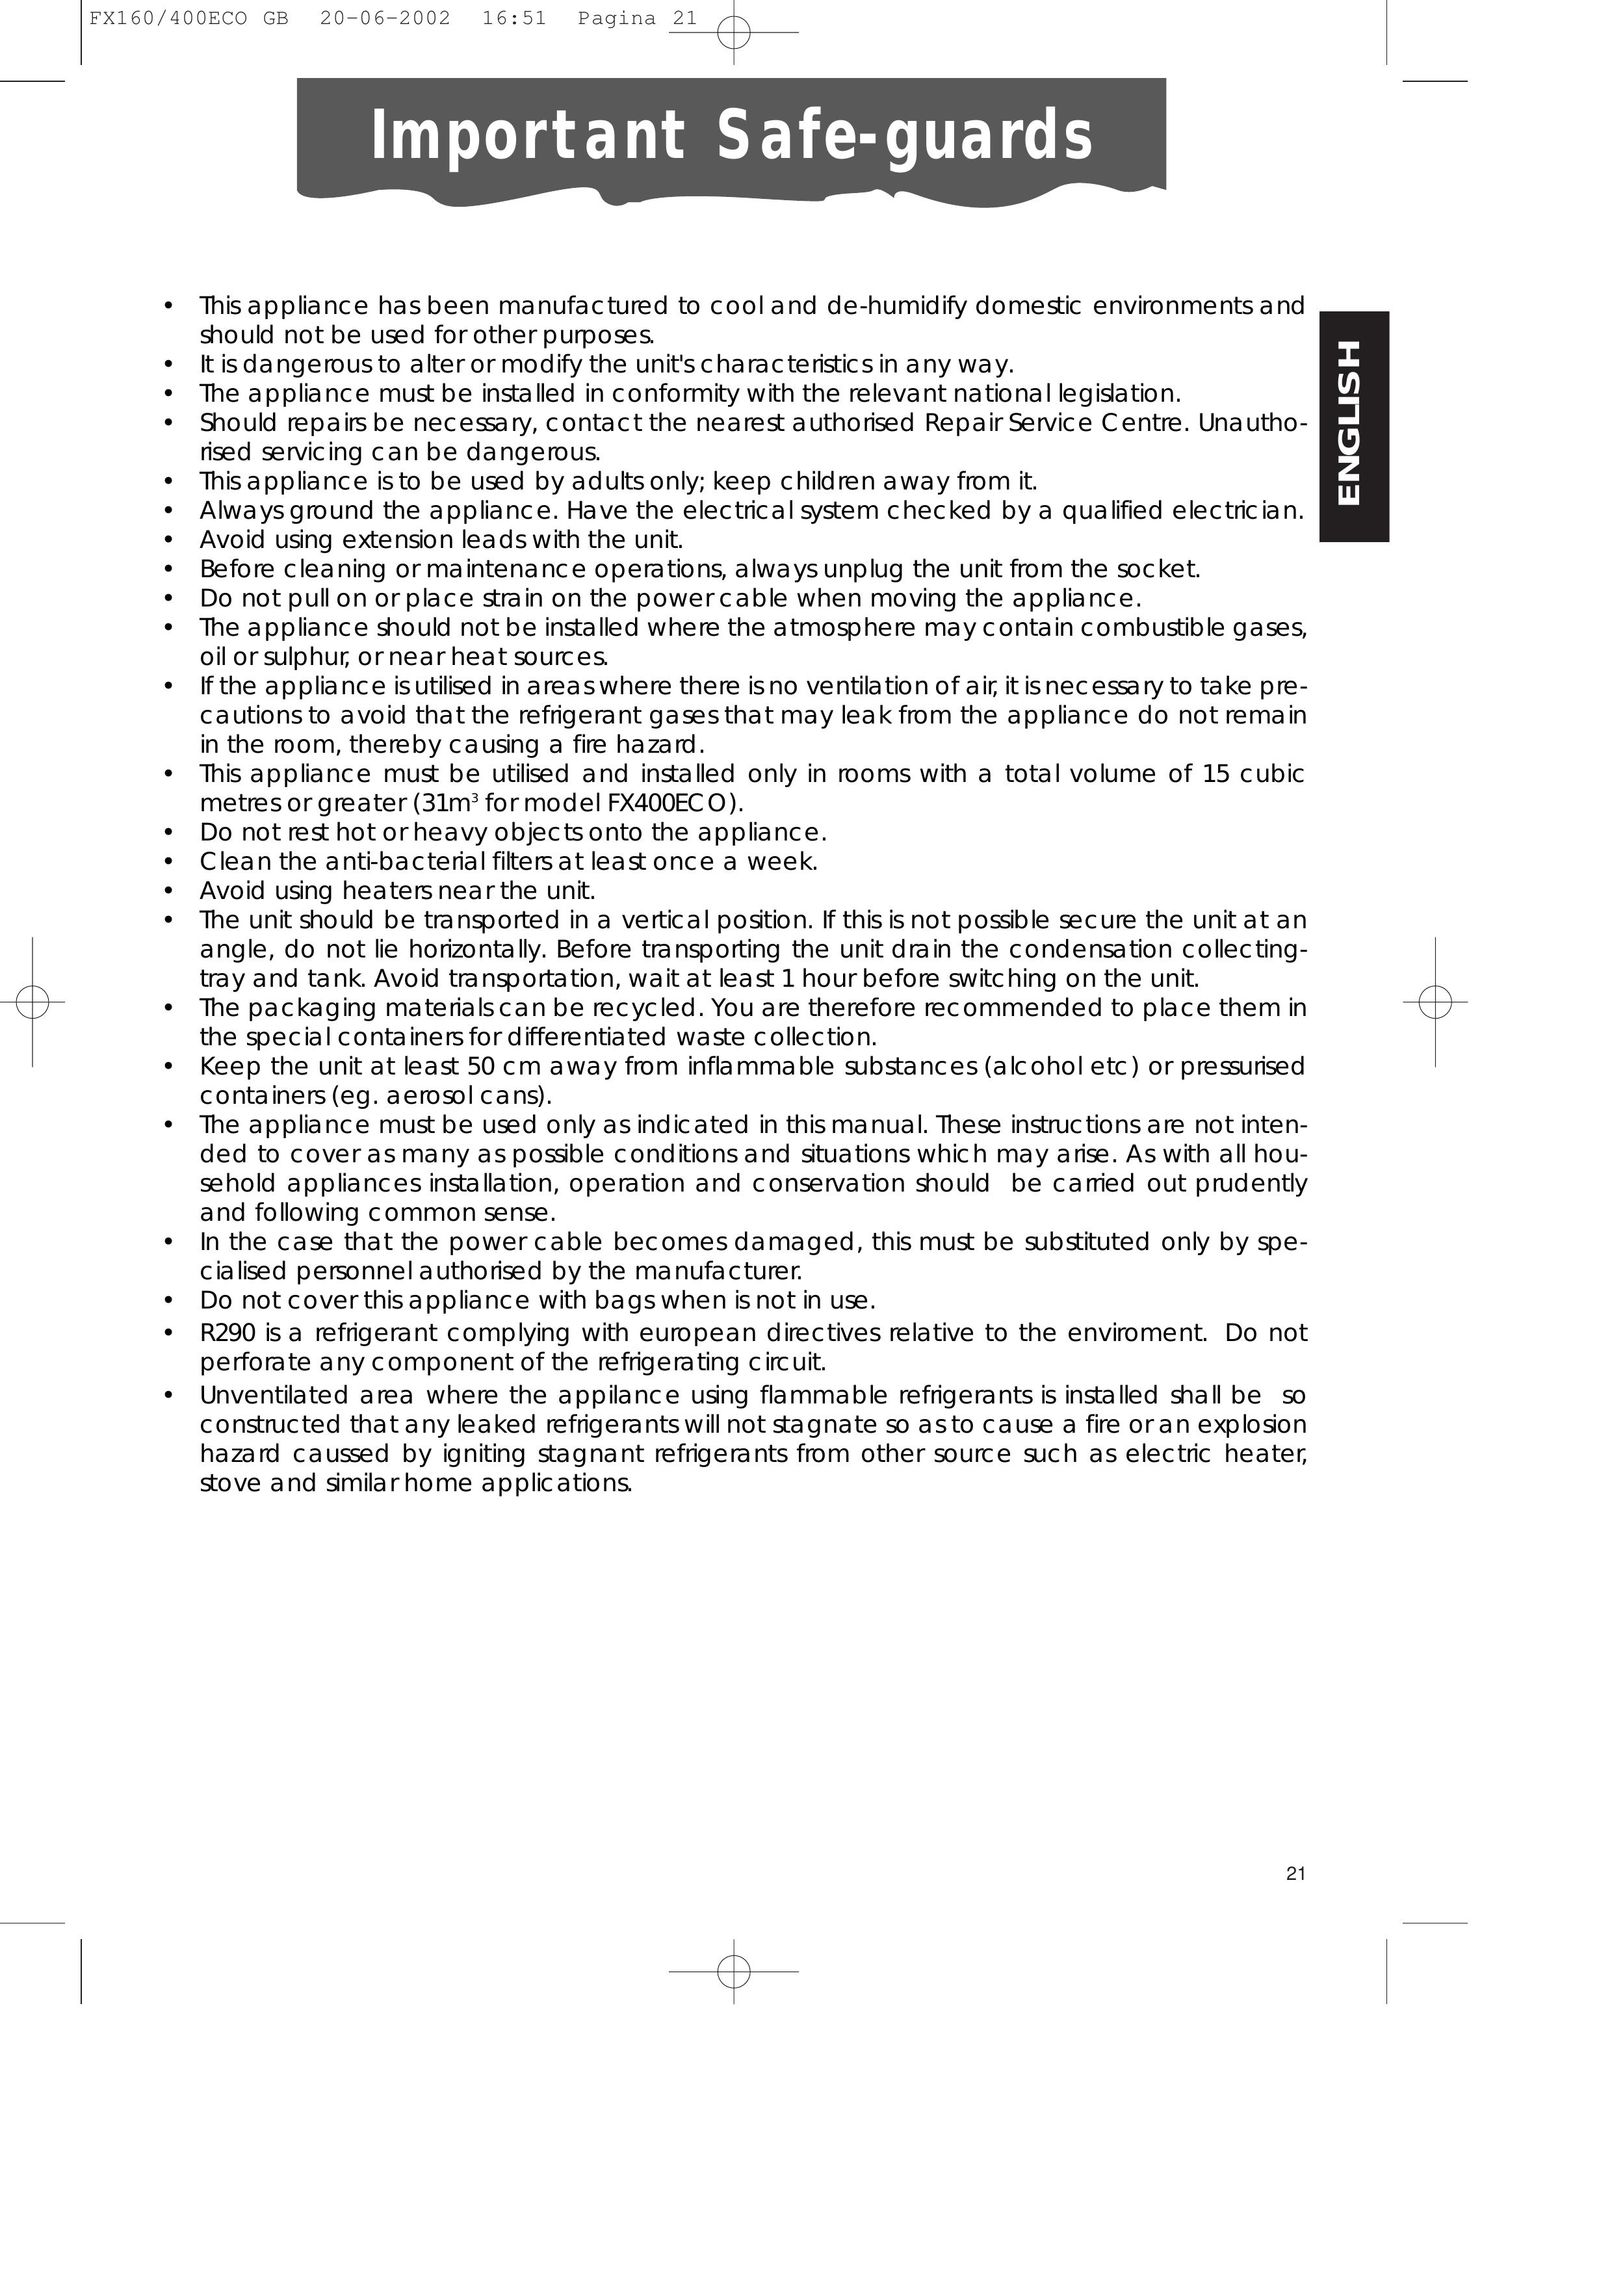 DeLonghi FX400ECO Air Conditioner User Manual